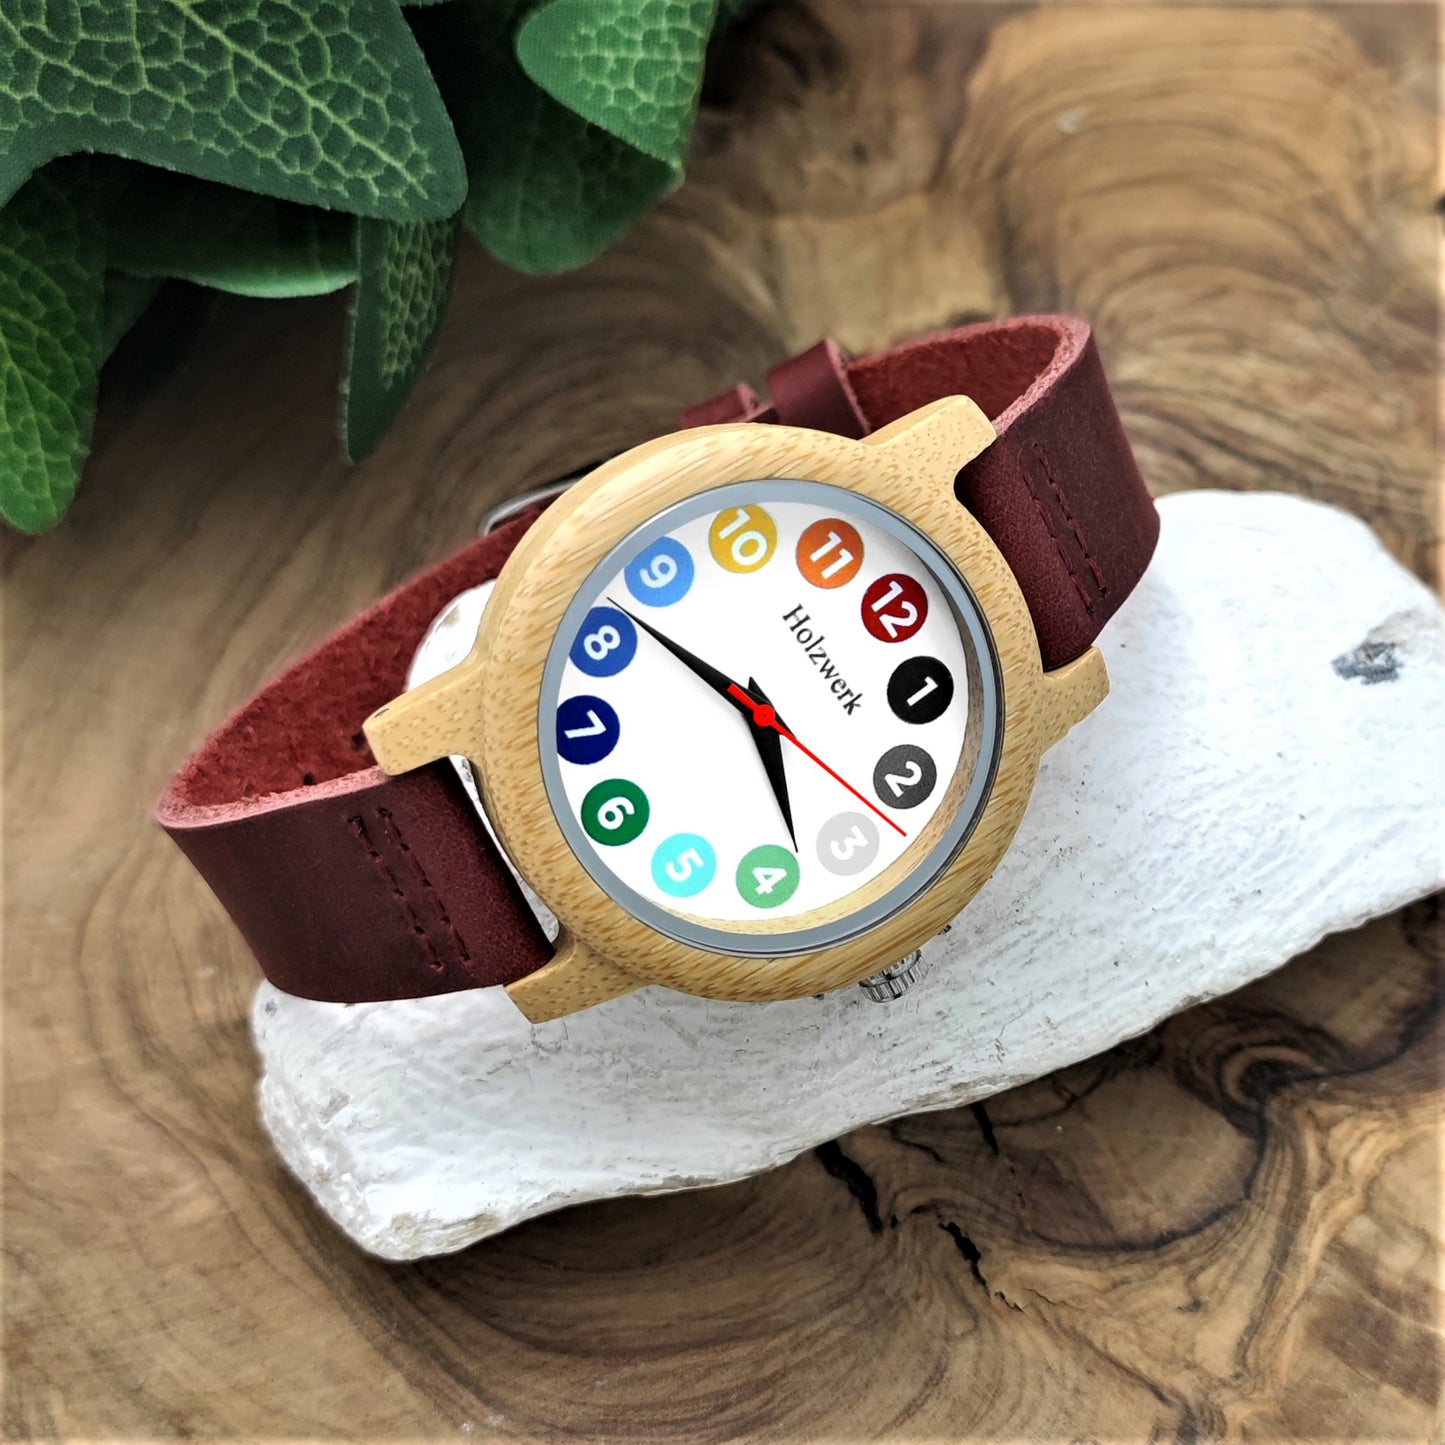 Holzwerk women's watch small colorful women's wooden watch white dark red